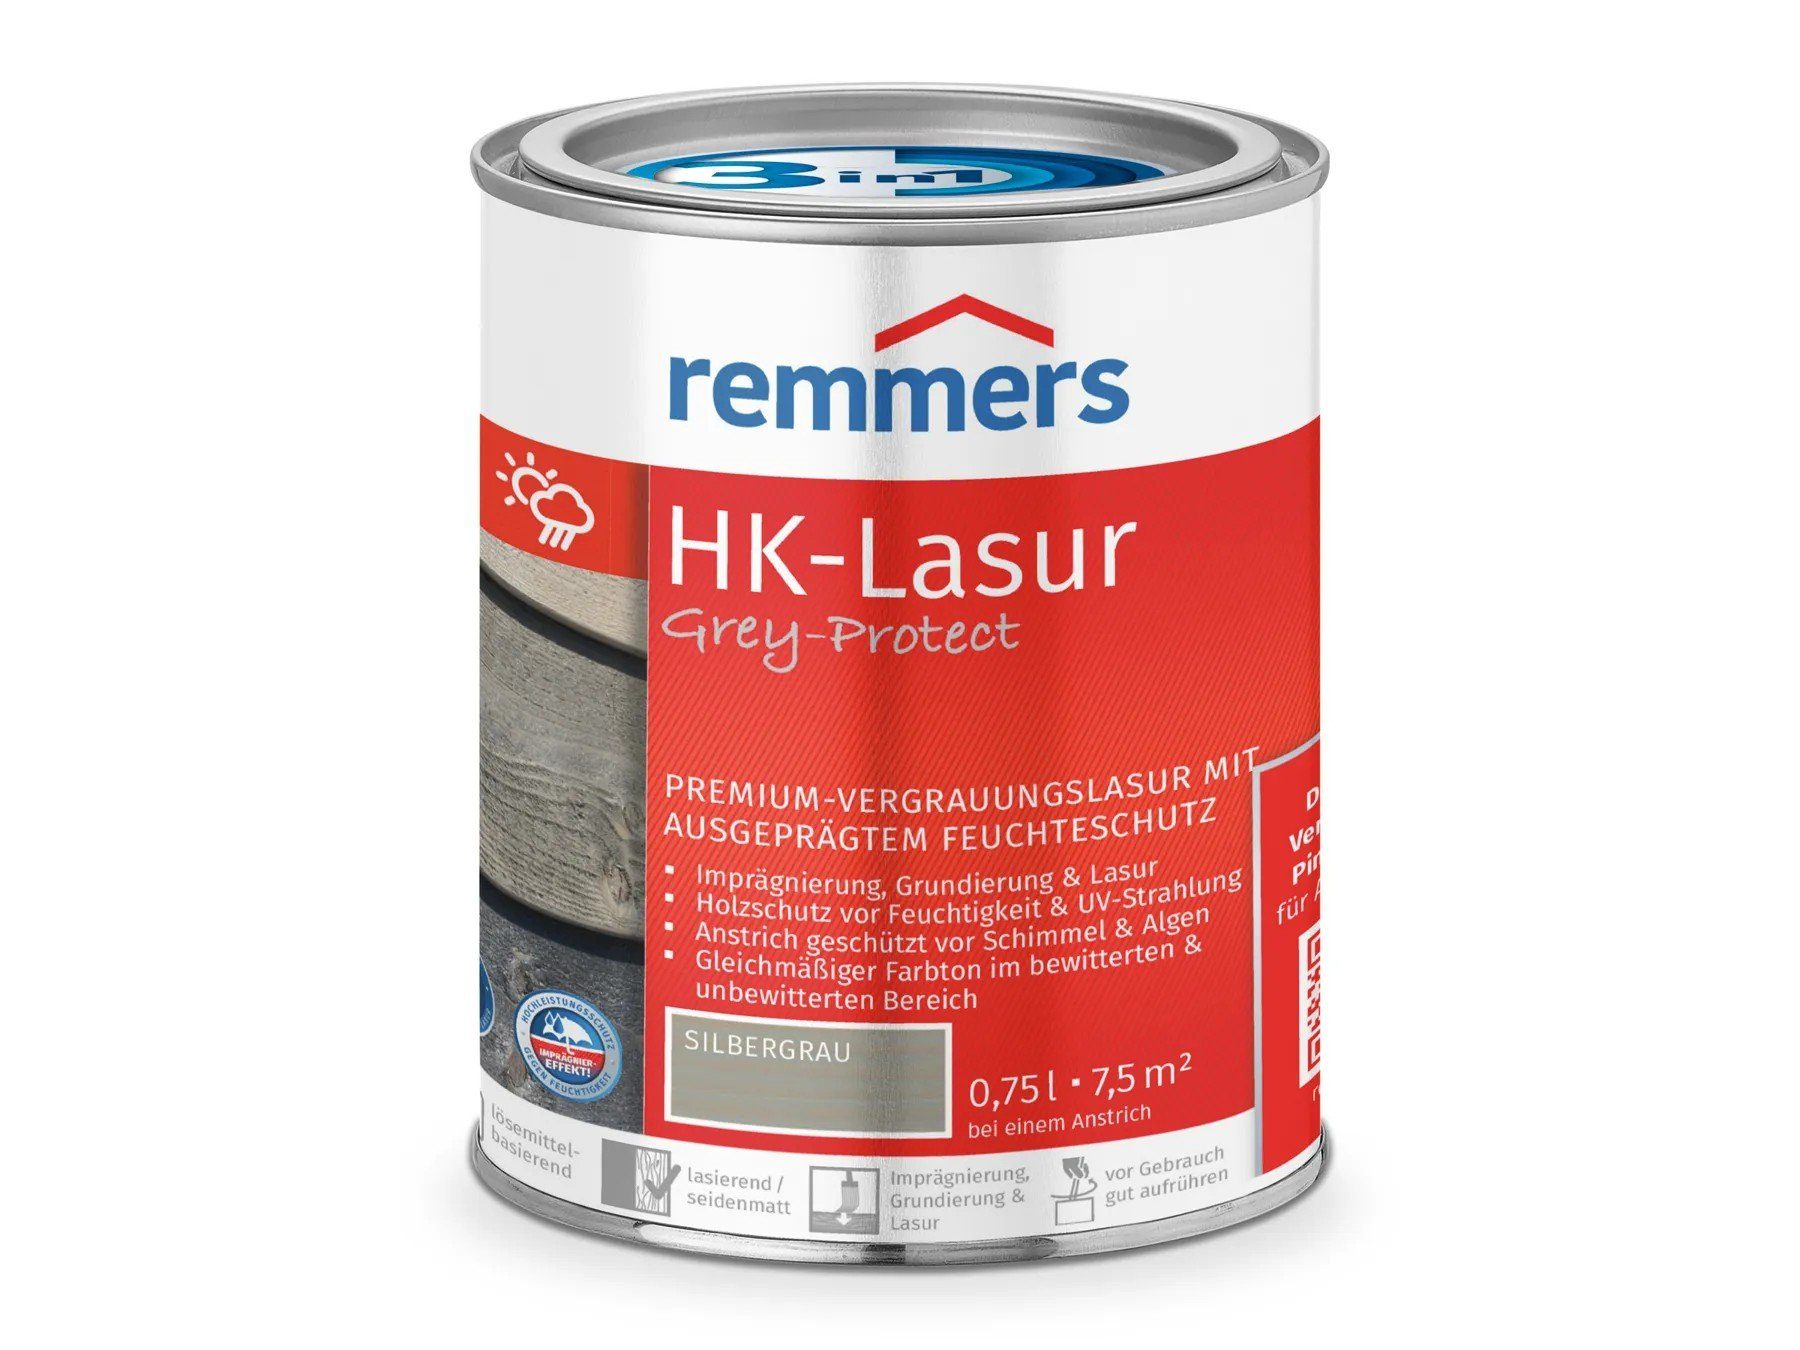 Remmers Holzschutzlasur HK-Lasur 3in1 (RC-970) silbergrau Grey-Protect